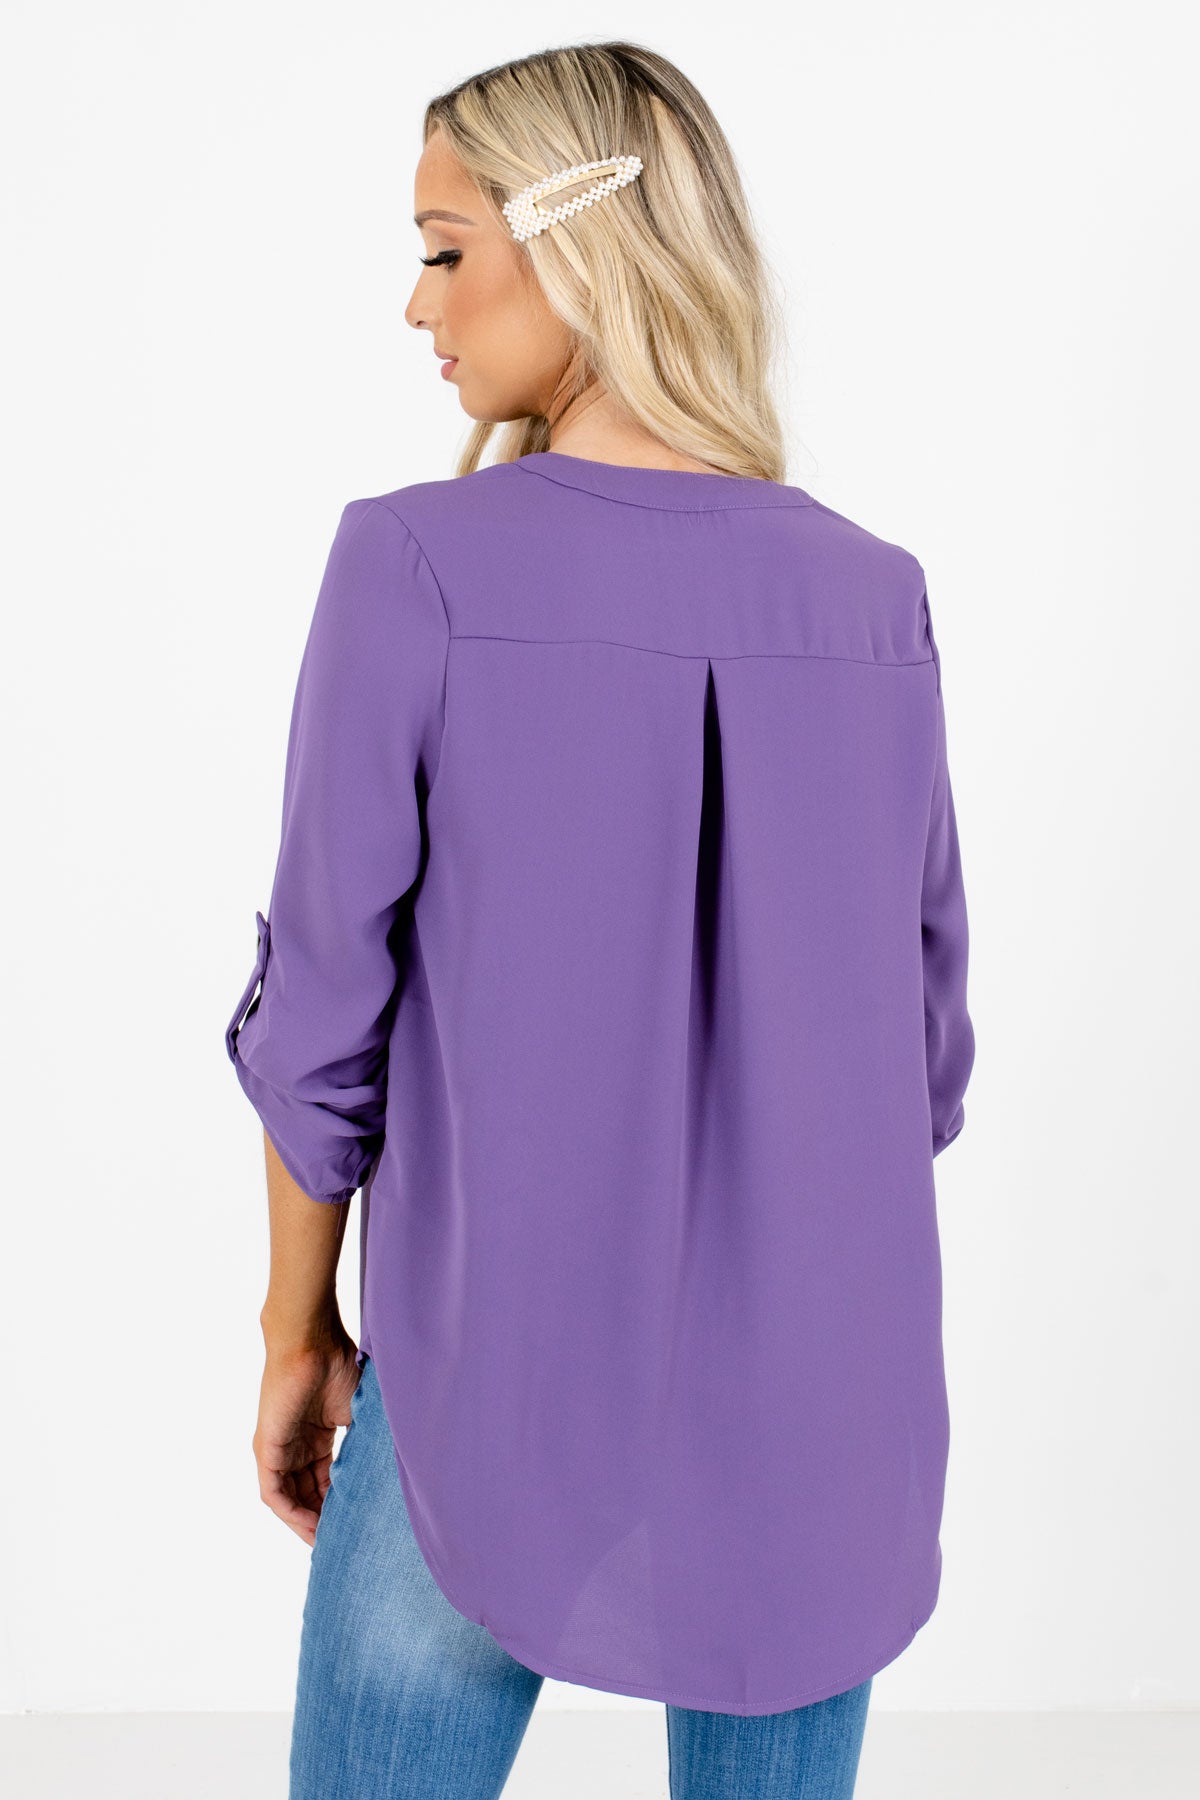 Women's Purple Pleated Accented Boutique Blouse